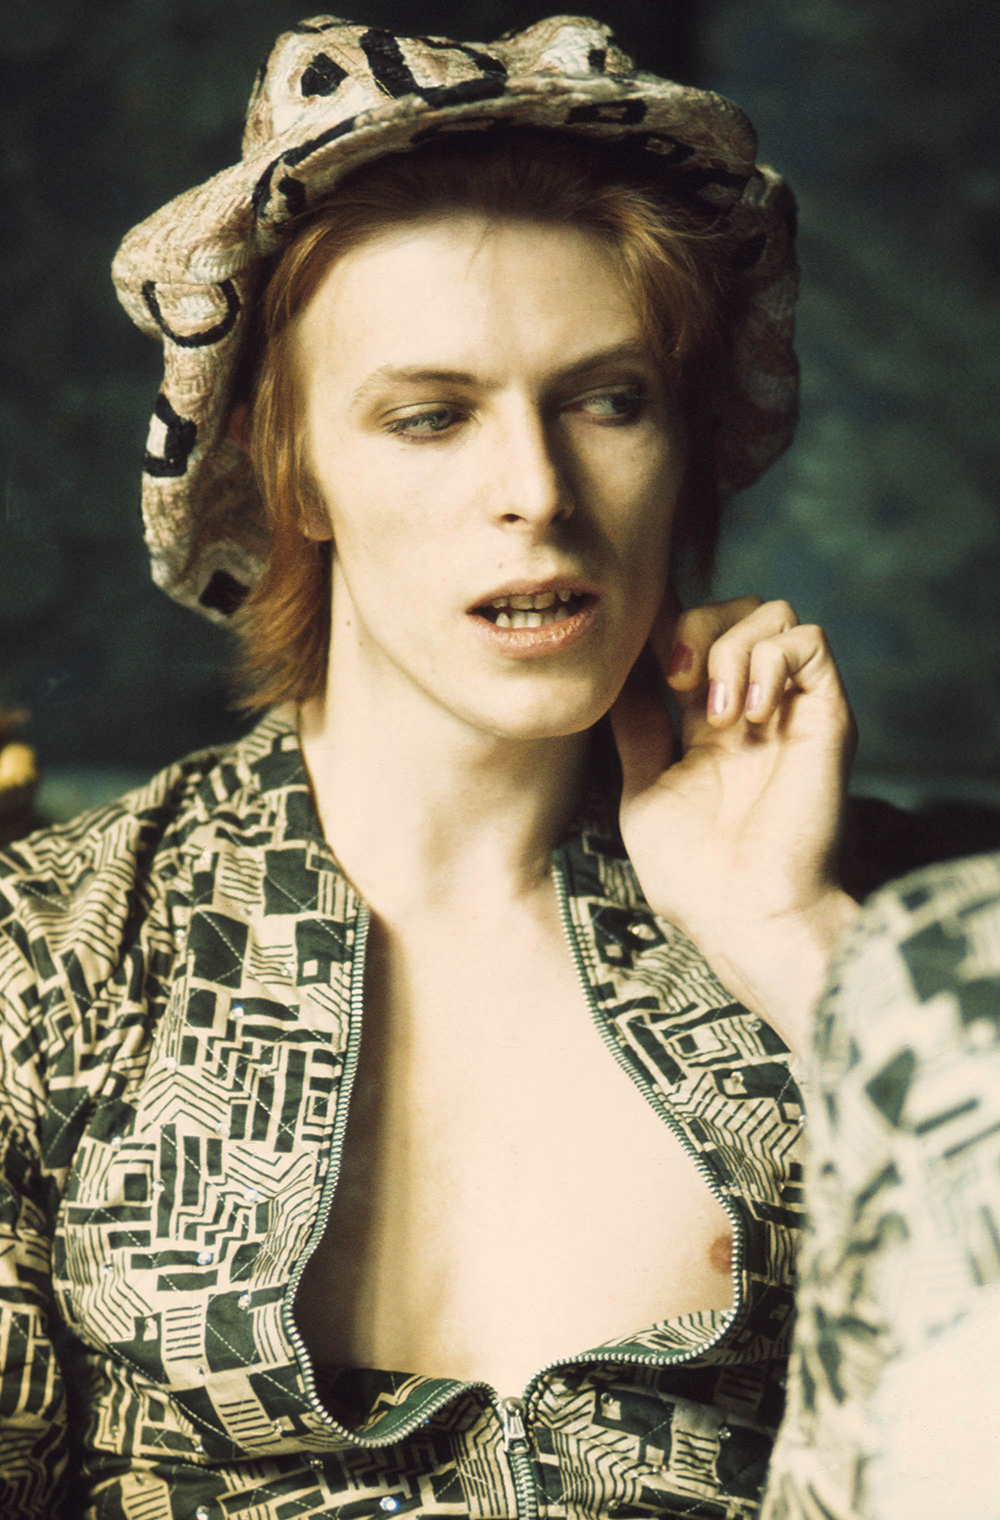 David Bowie being interviewed at home in Beckenham, London in 1972.